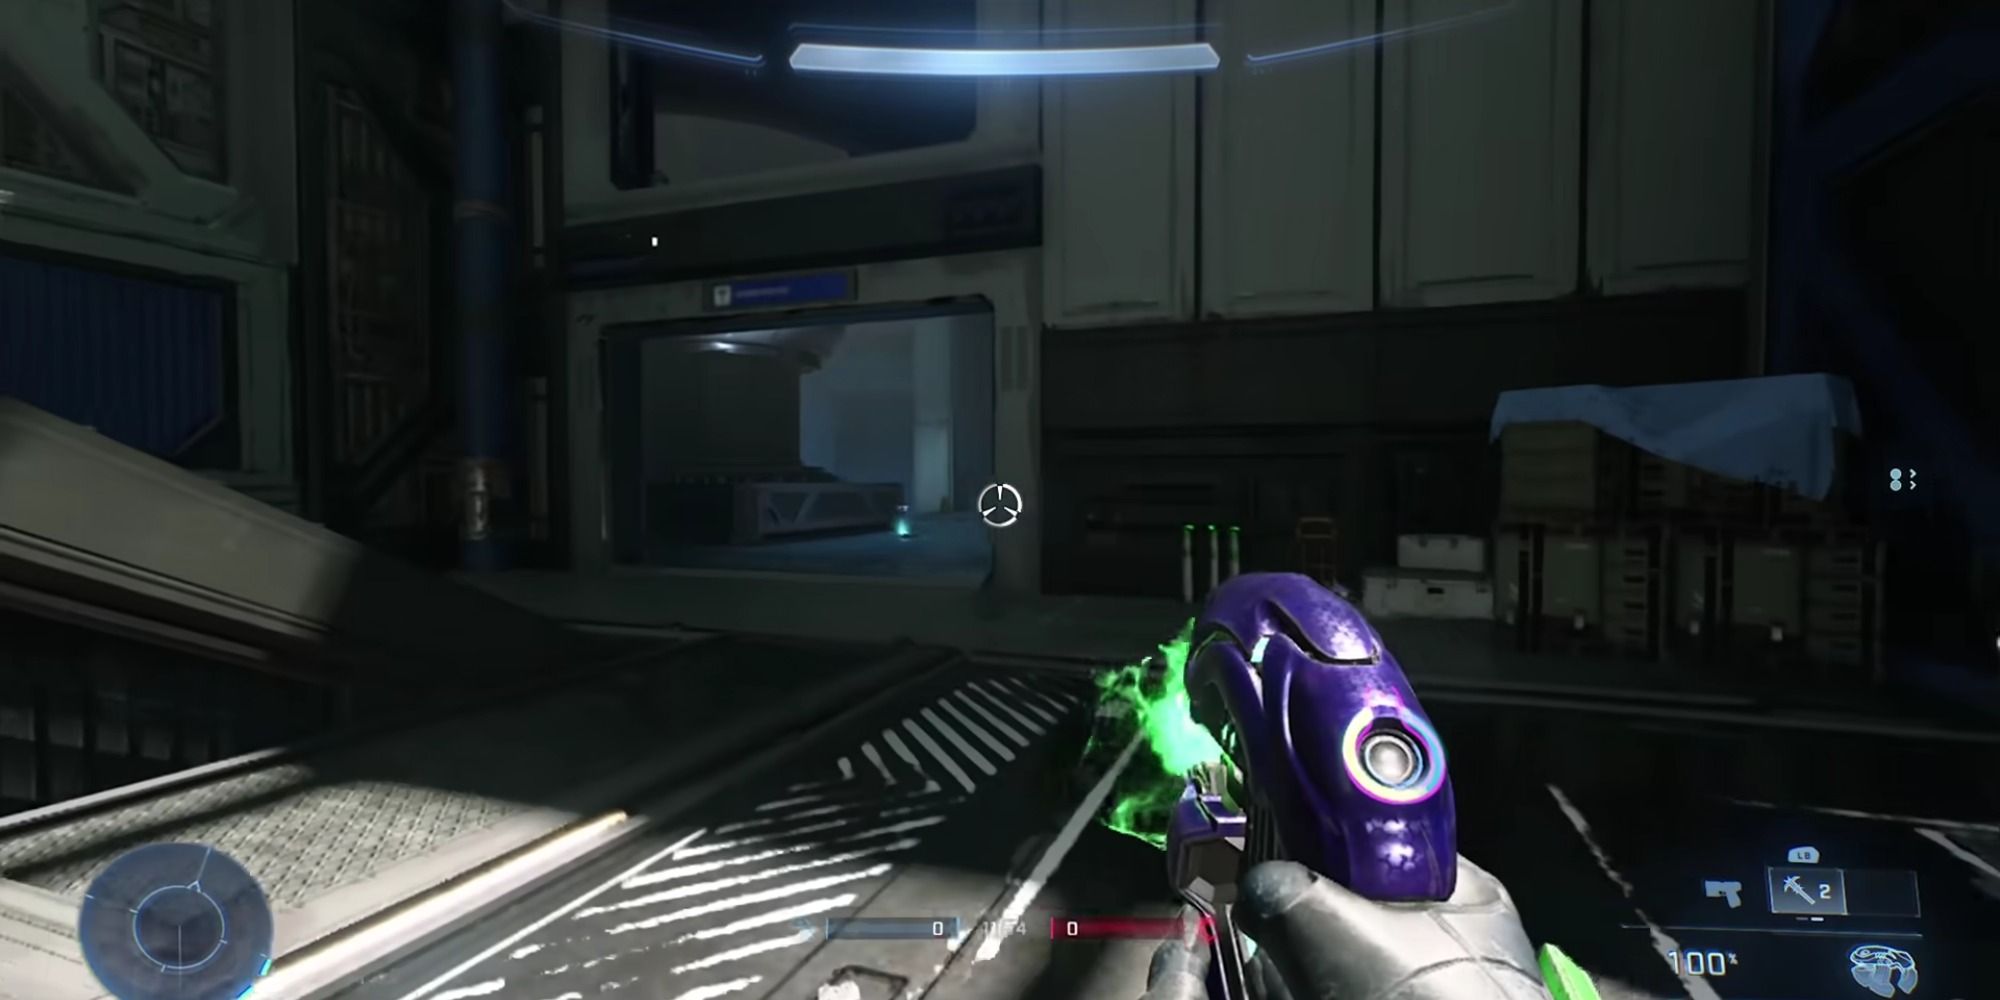 The Plasma Pistol in Halo Infinite